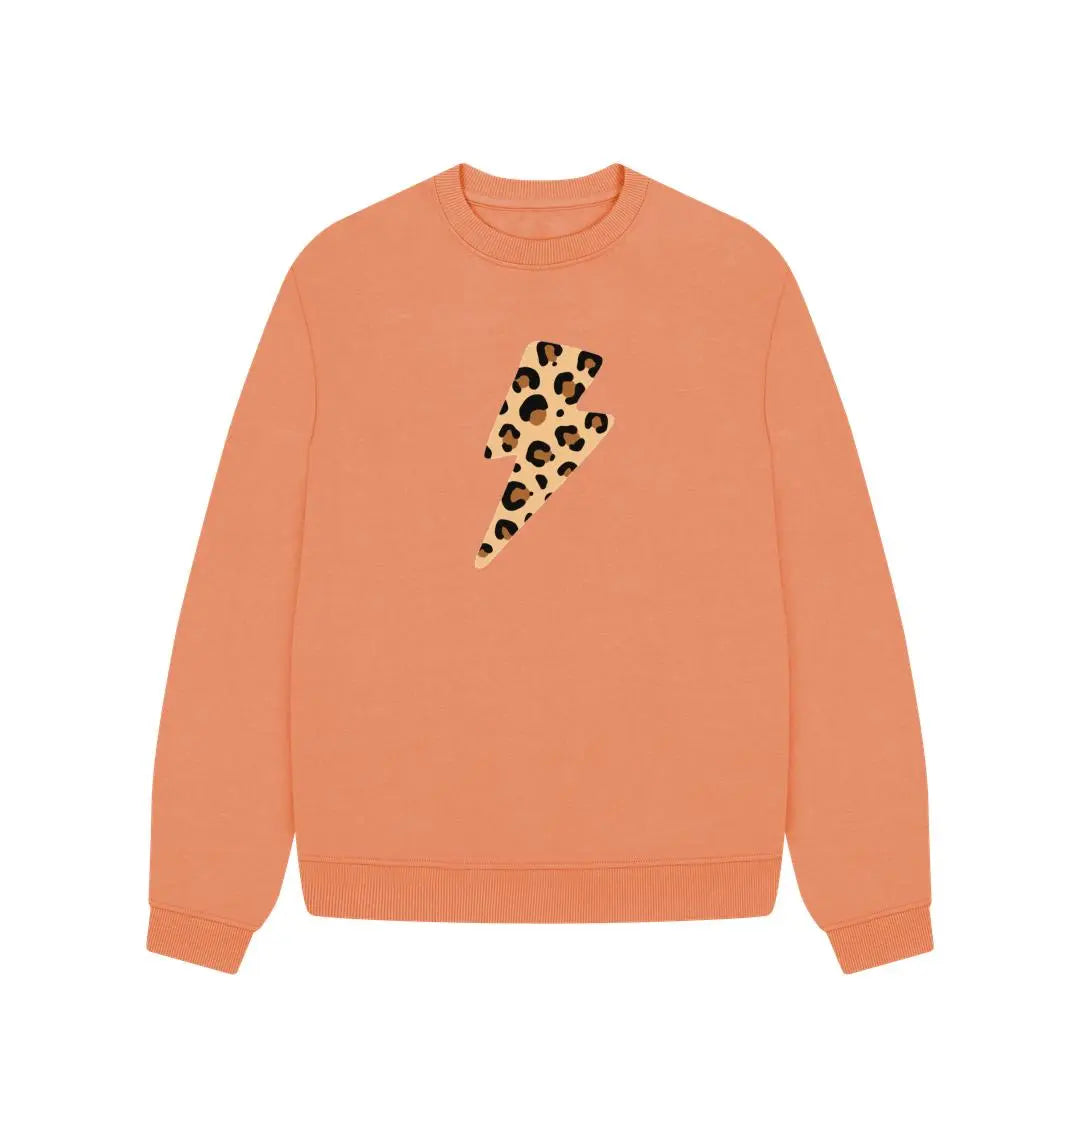 Leopard print lightning bolt oversized sweater